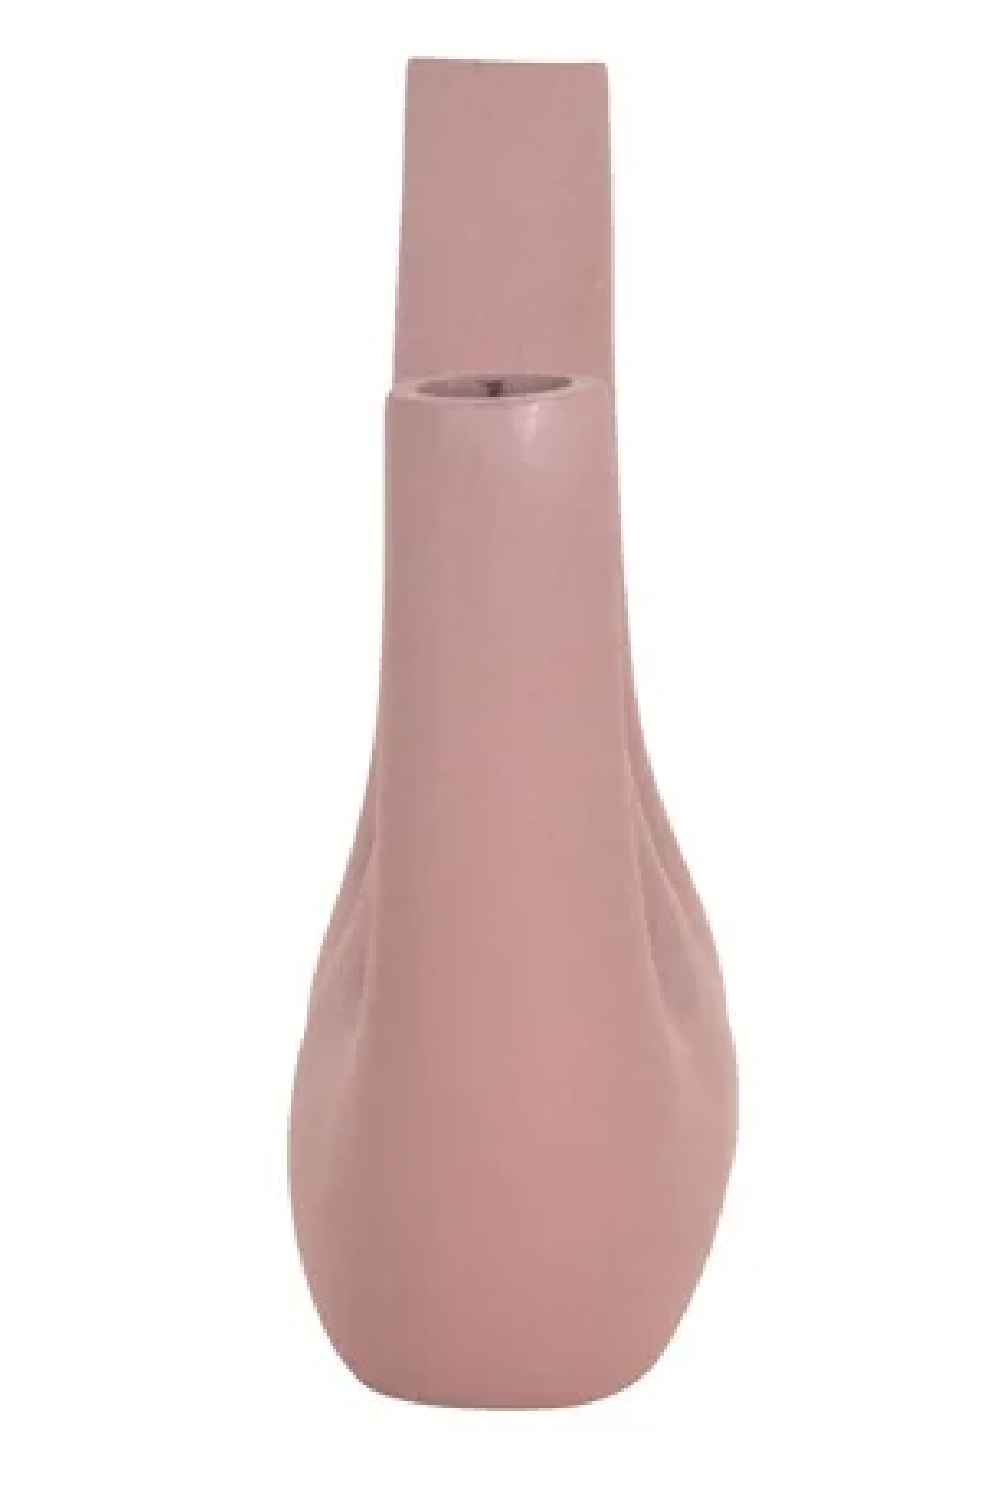 Pink Aluminum Modern Vase | OROA Jody | Oroa.com